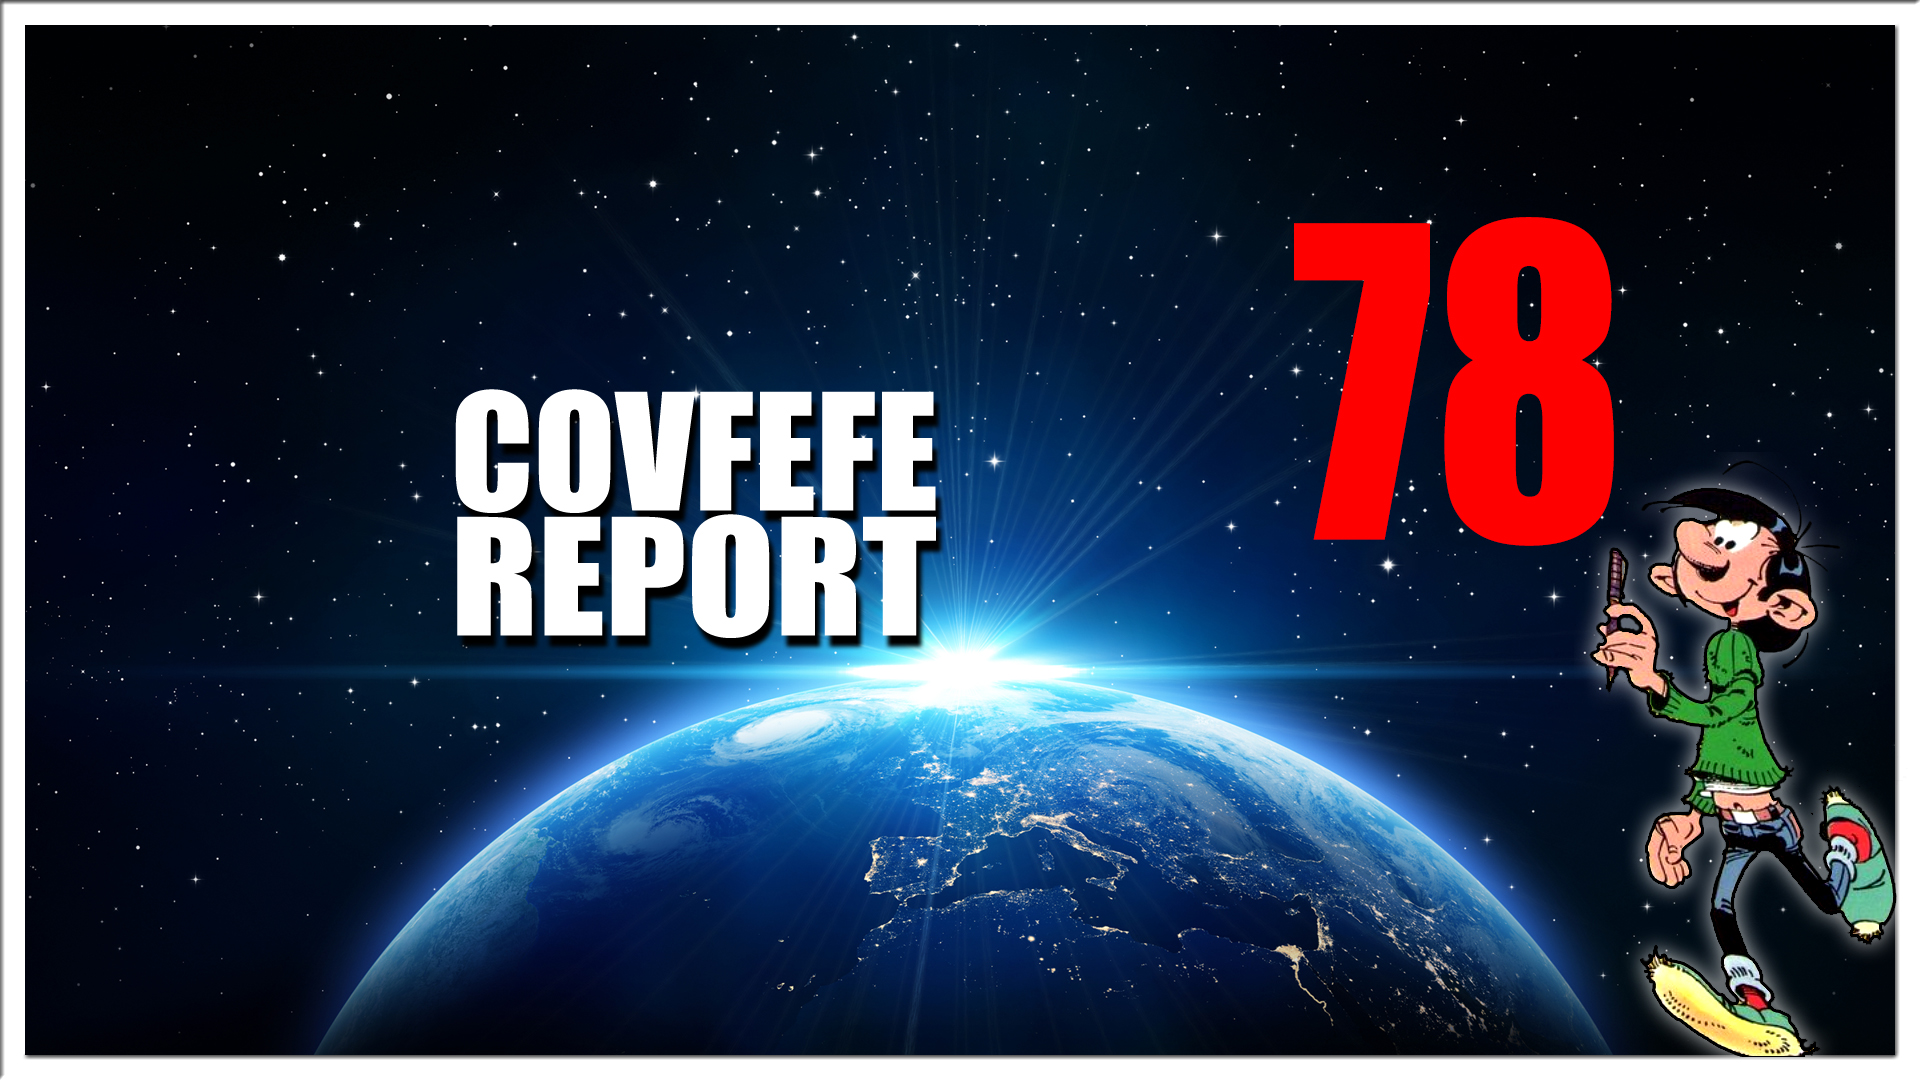 Covfefe Report 78. Ned doneert - Australie, Jaarwisseling rustig, MH17 - Canada, Iran, Urgentie